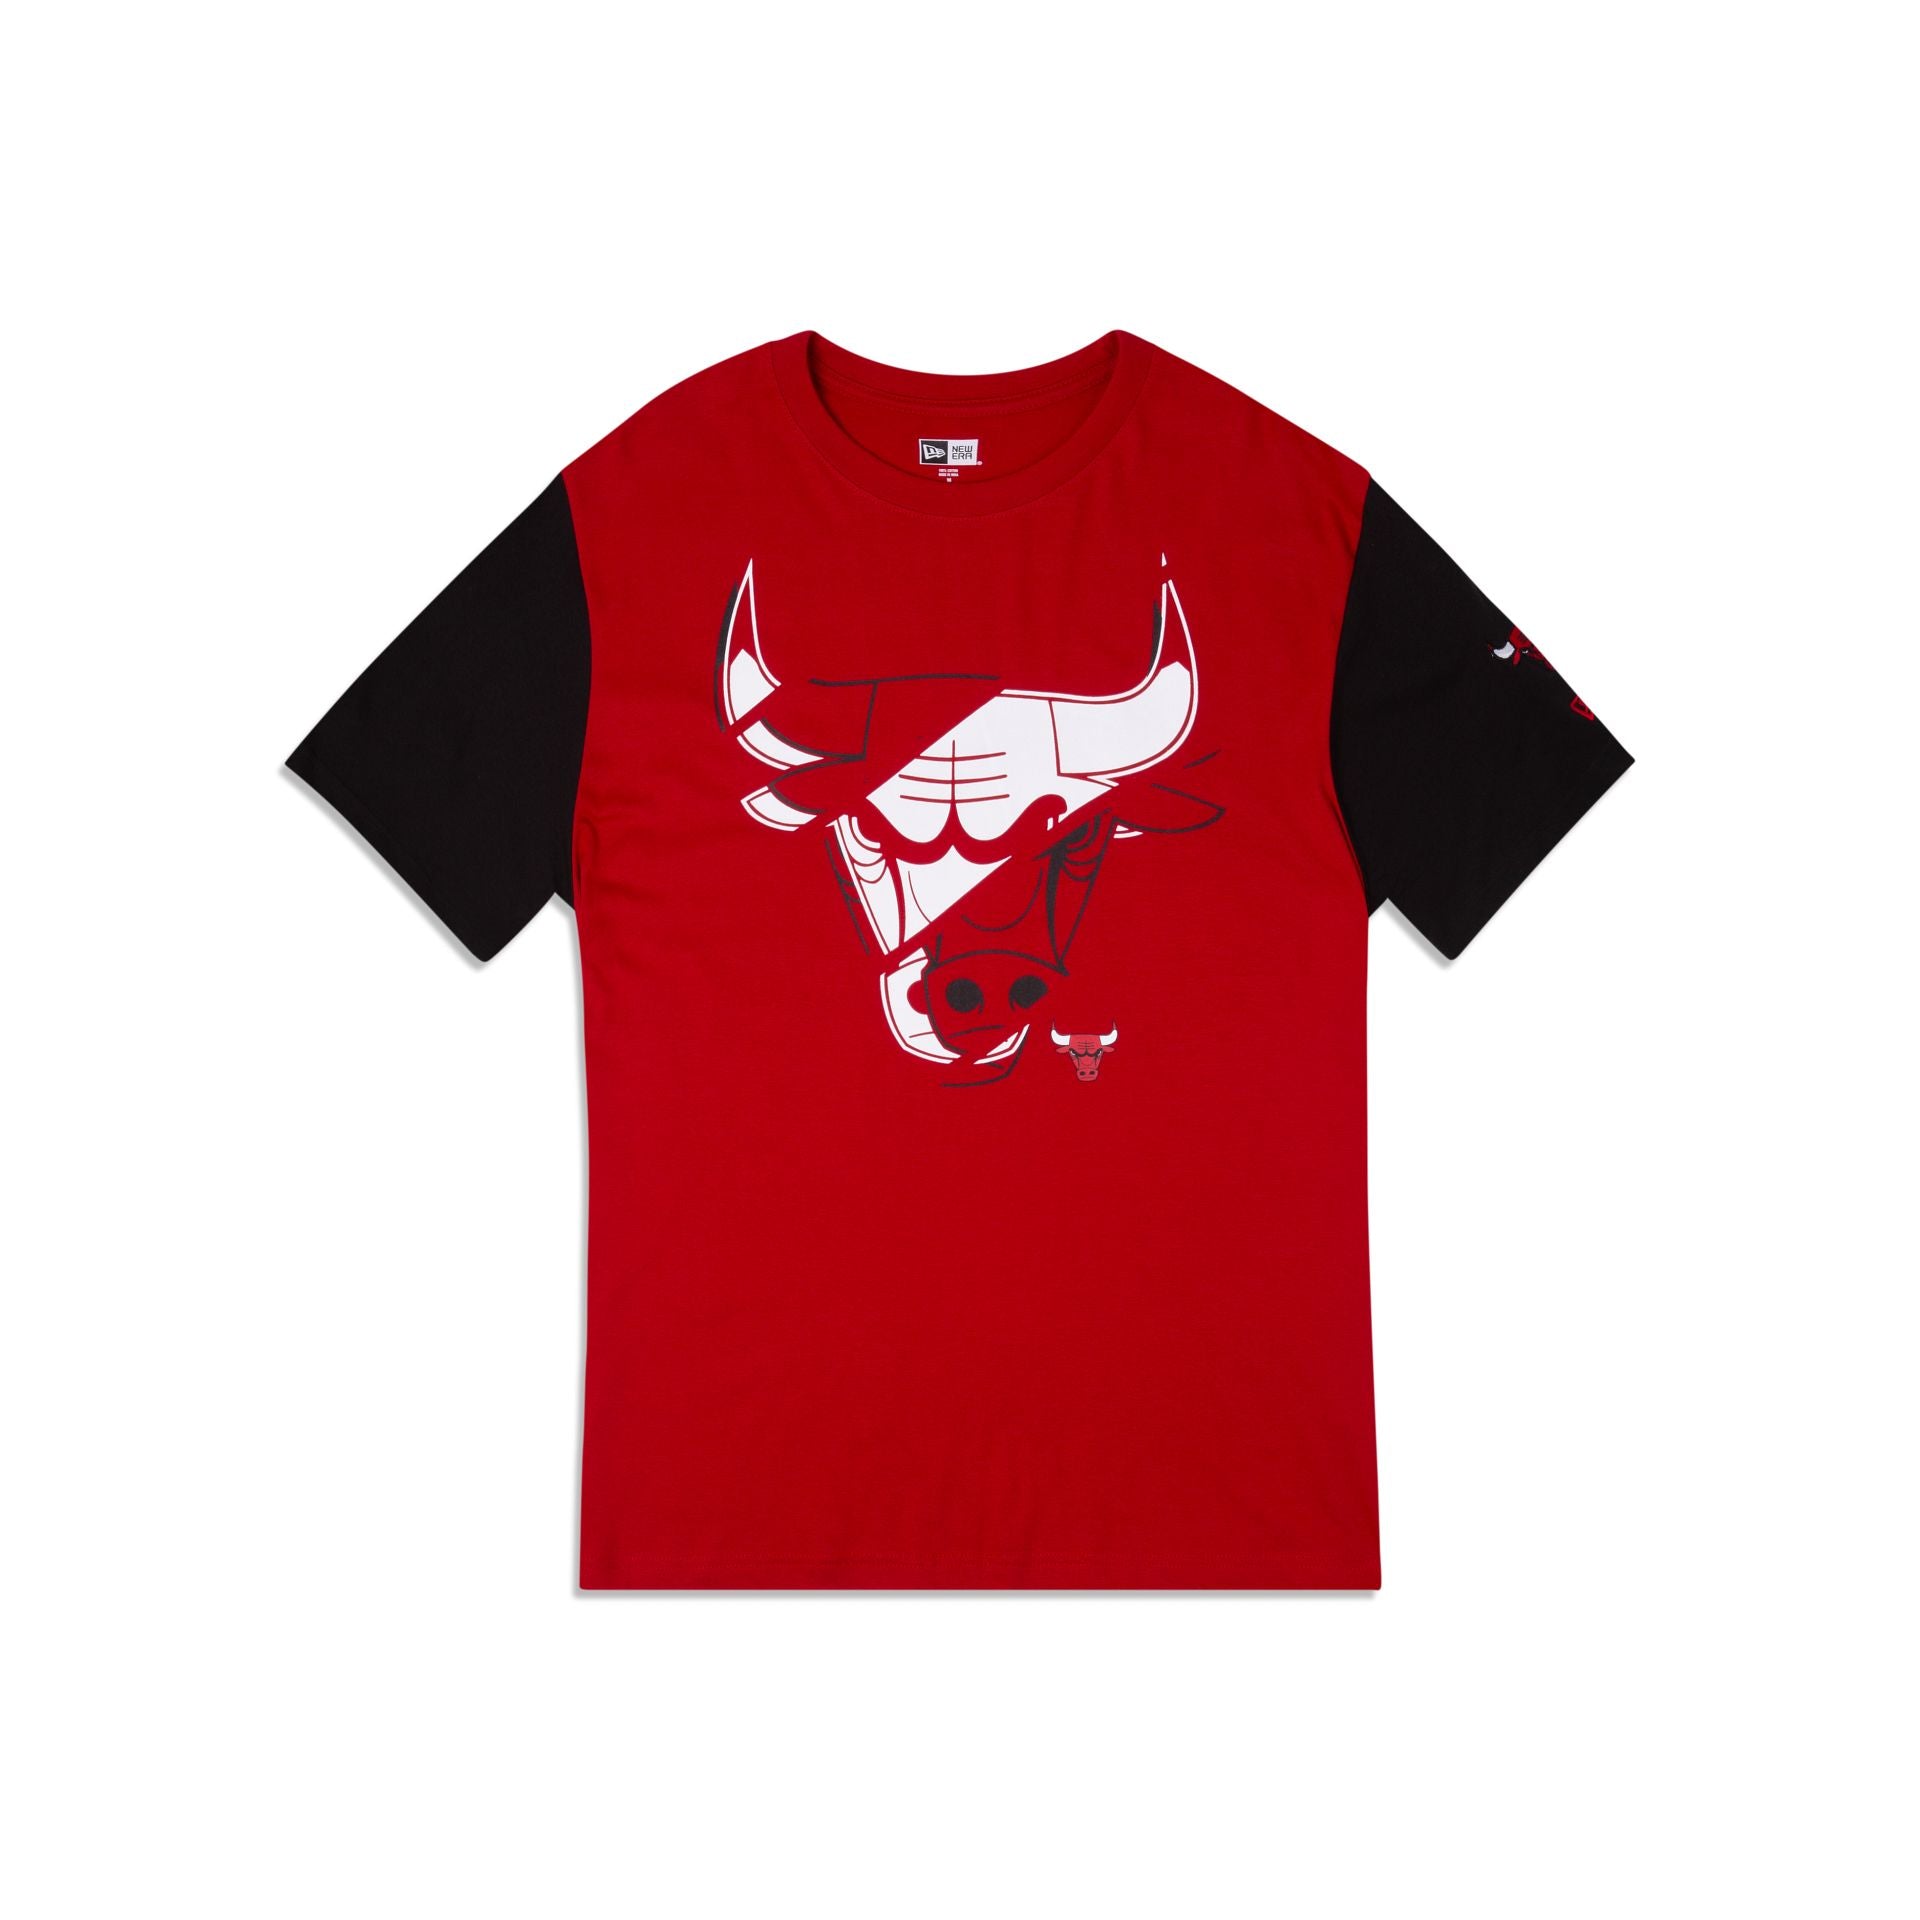 Men's Screen Stars NBA Chicago Bulls Red T-shirt, Sz. M